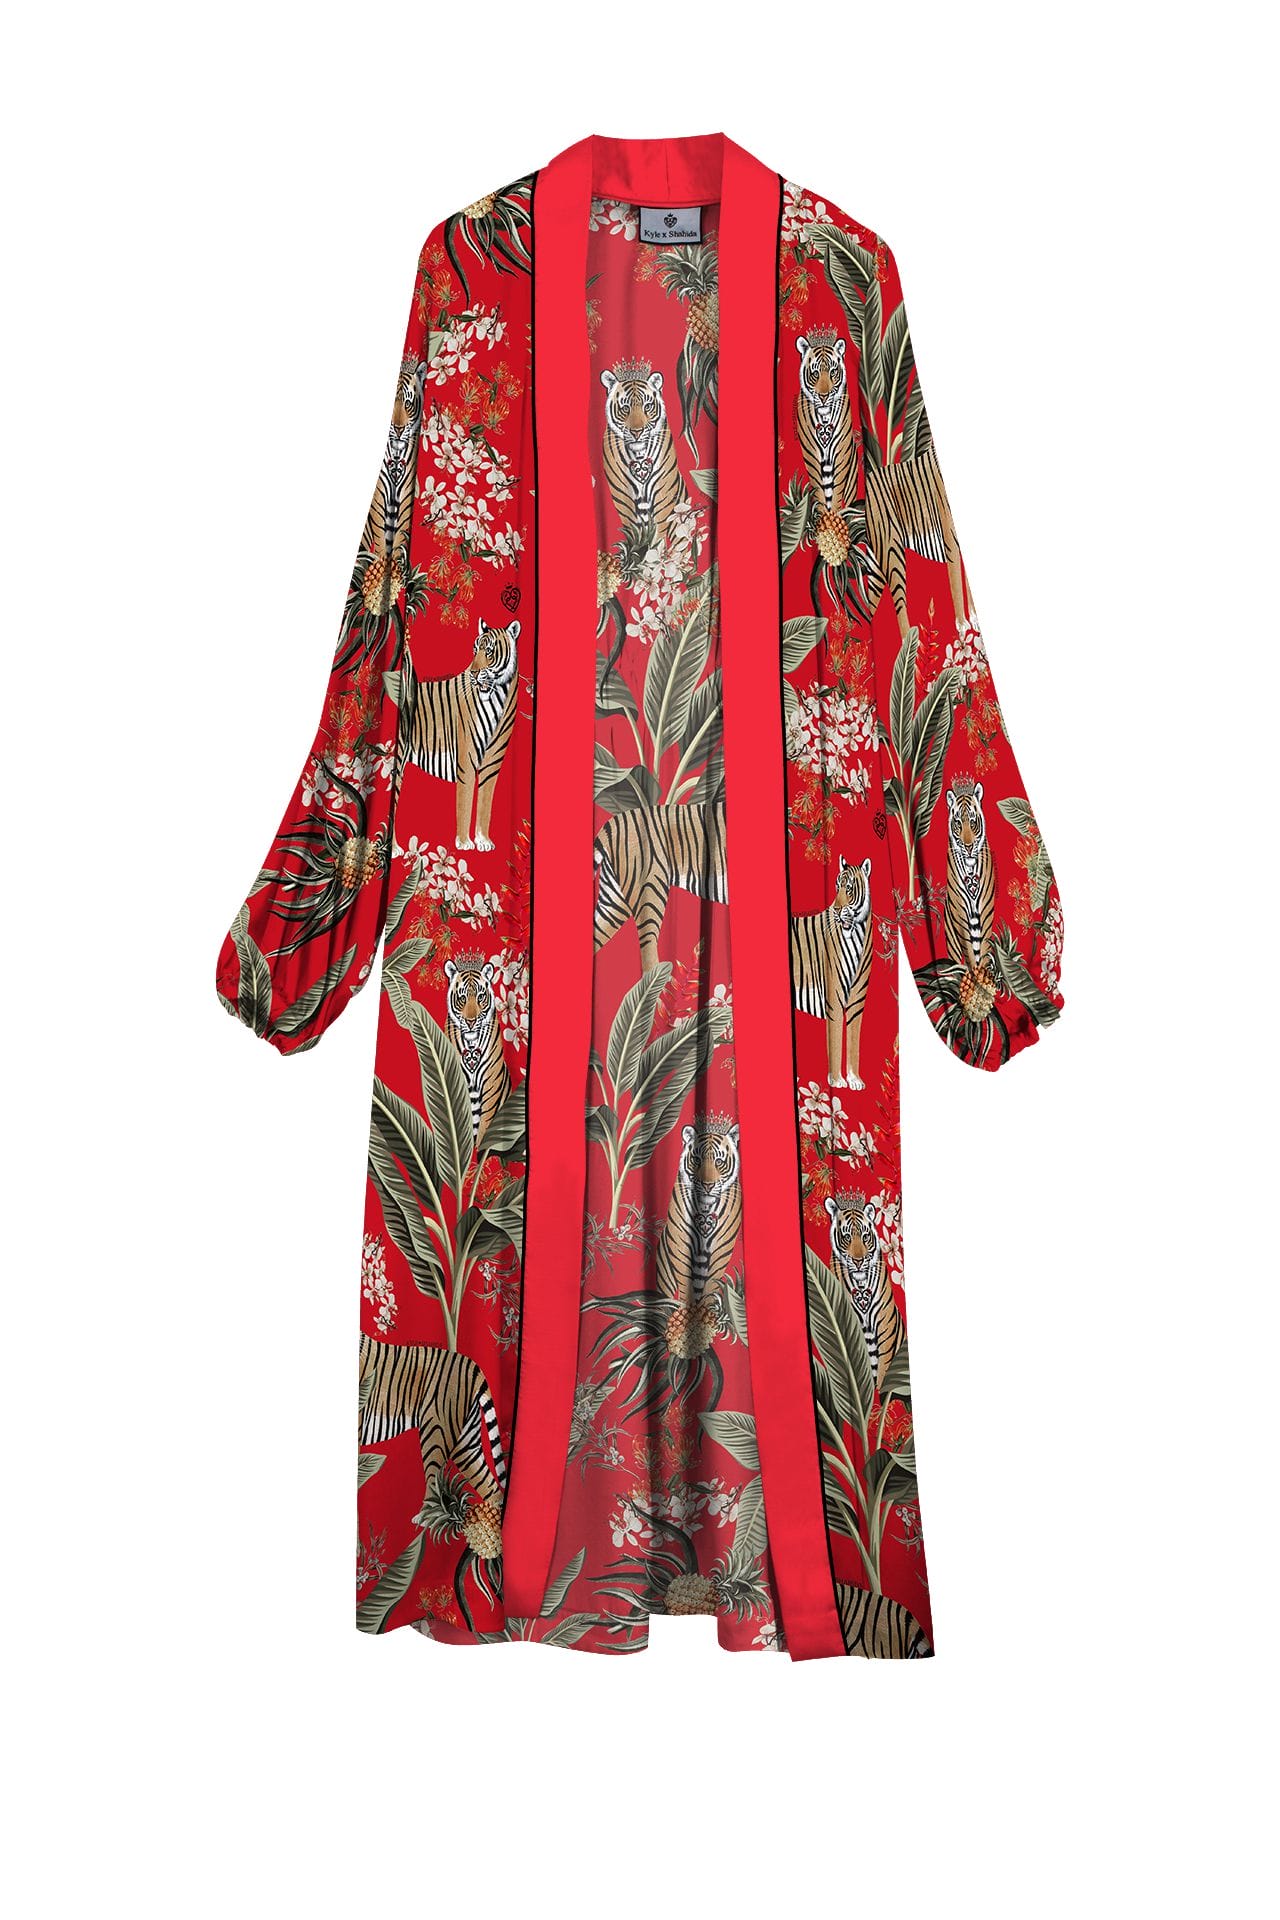 "silk kimono robes for women" "Kyle X Shahida" "robe silk kimono," "silk kimono robe womens" "animal print kimono"